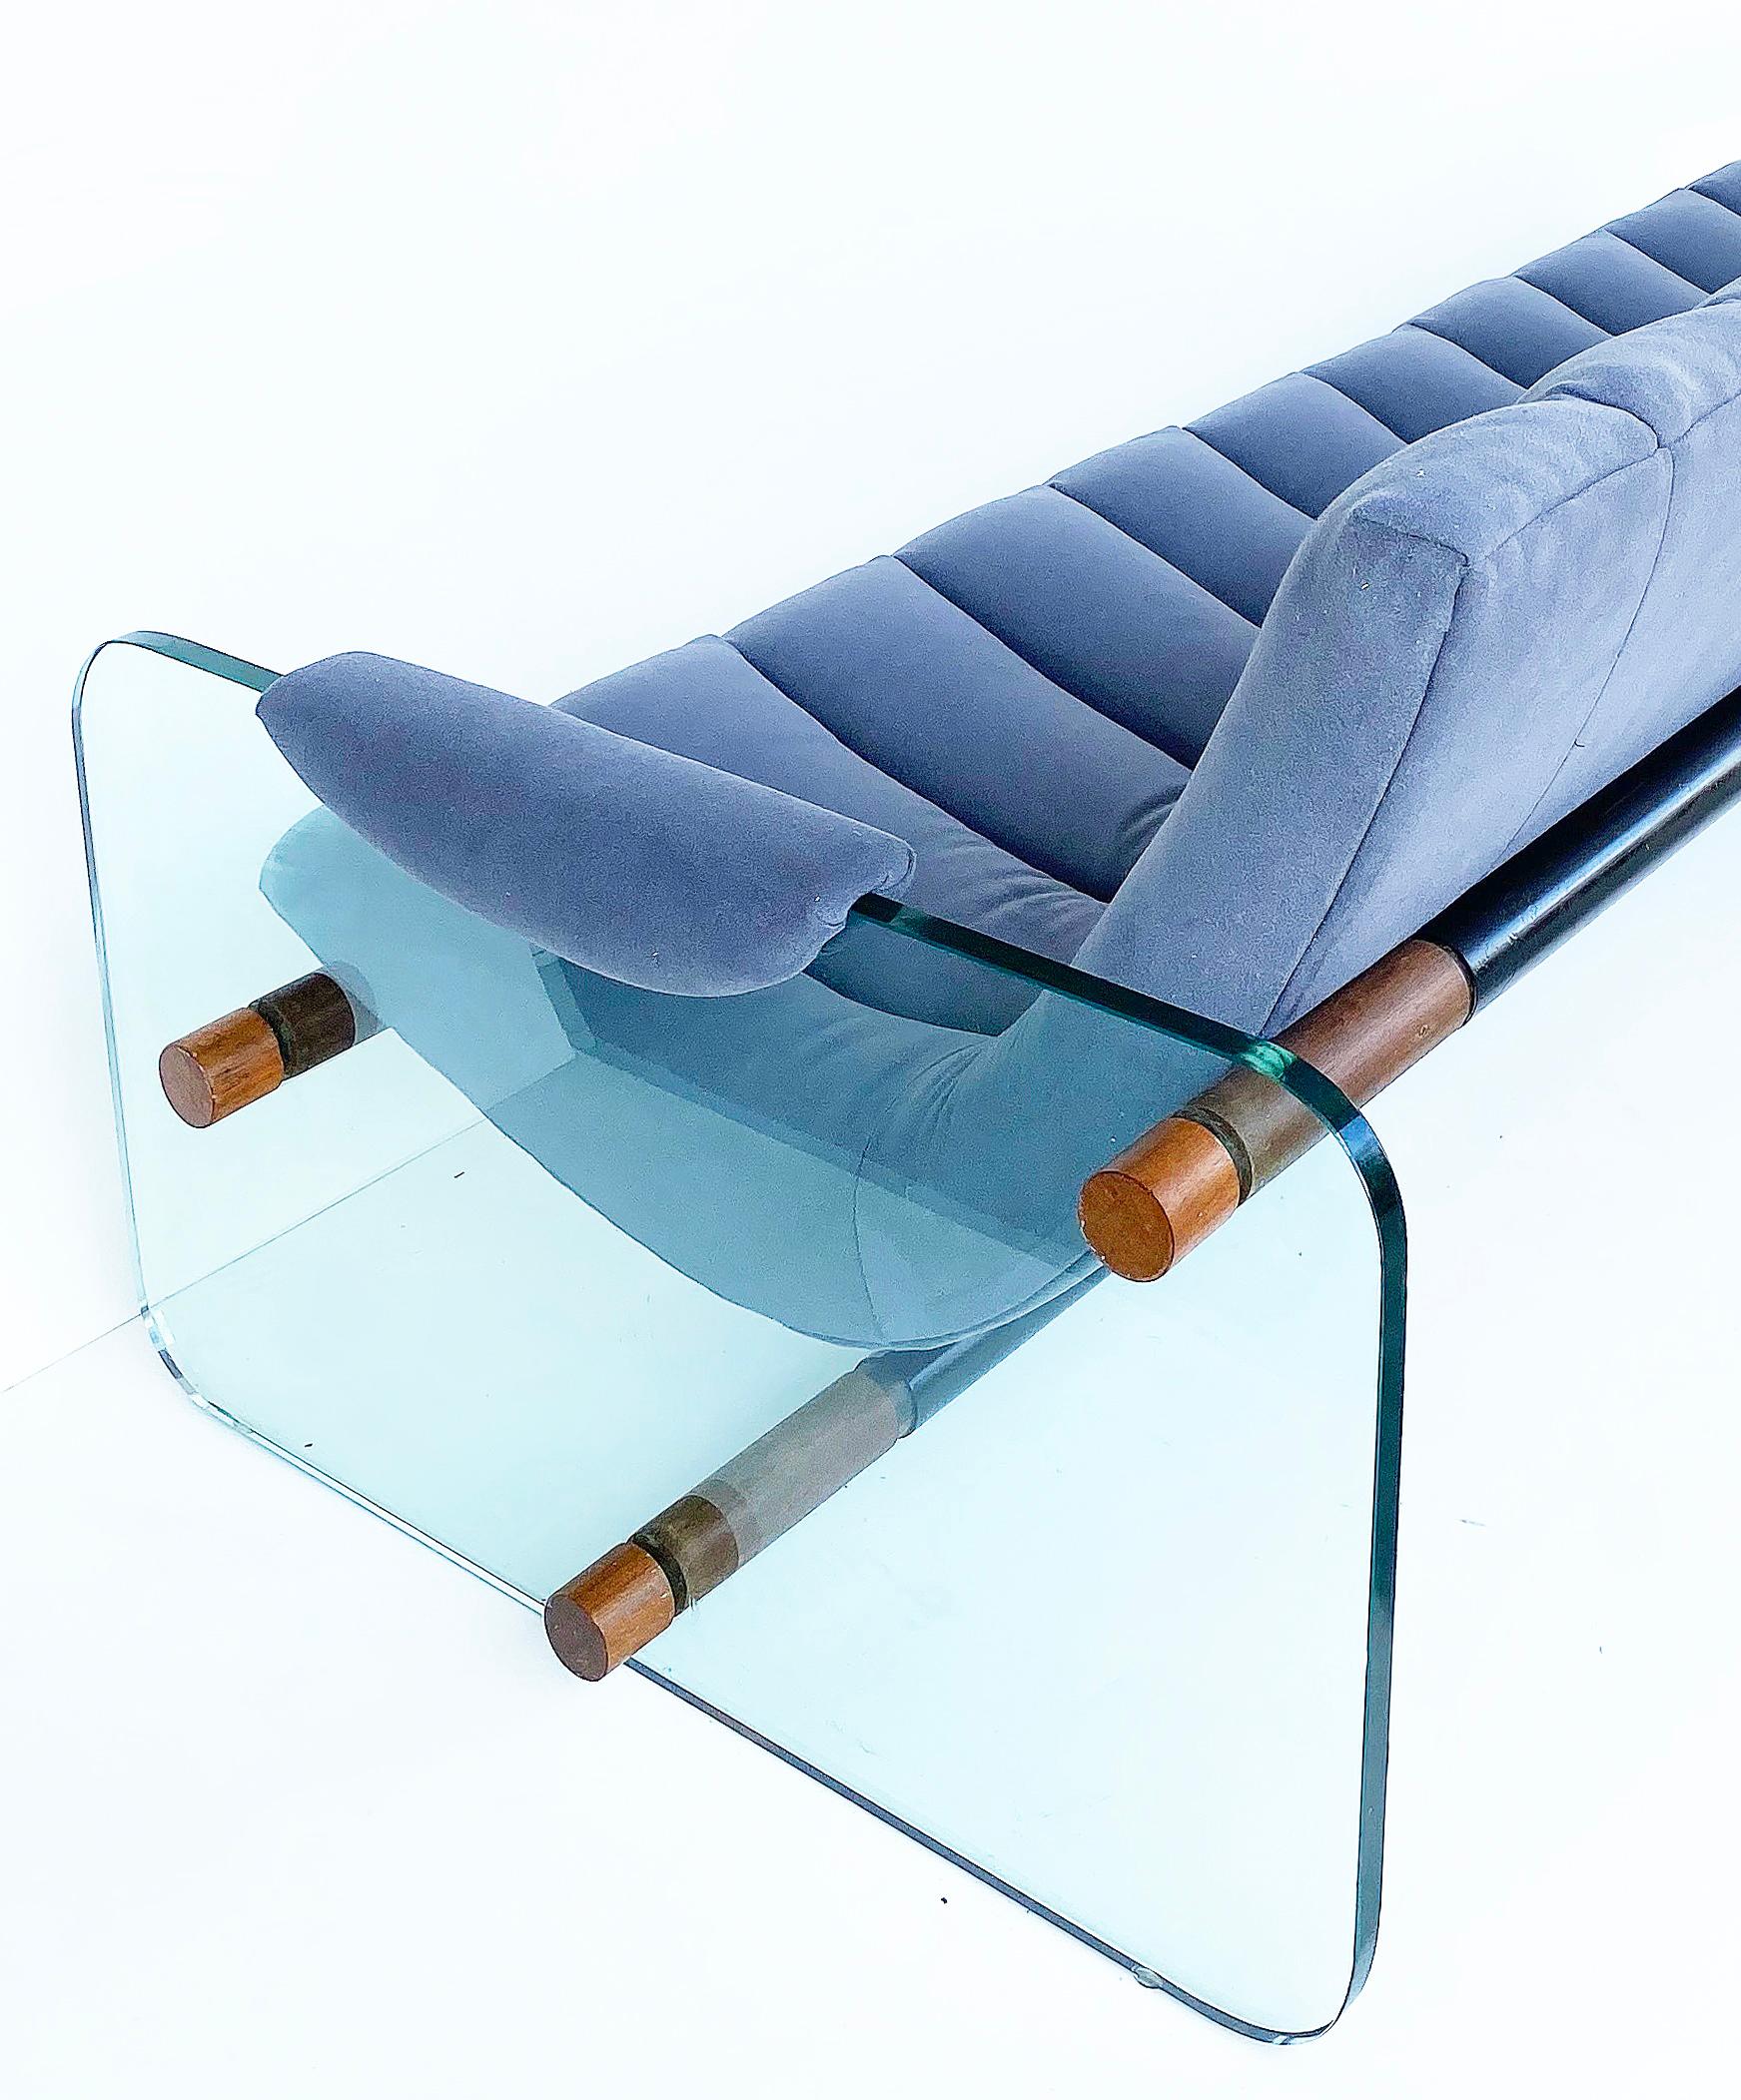 Wood Adrian Pearsall Craft Associates Glass Sided Sofa in Velvet Upholstery